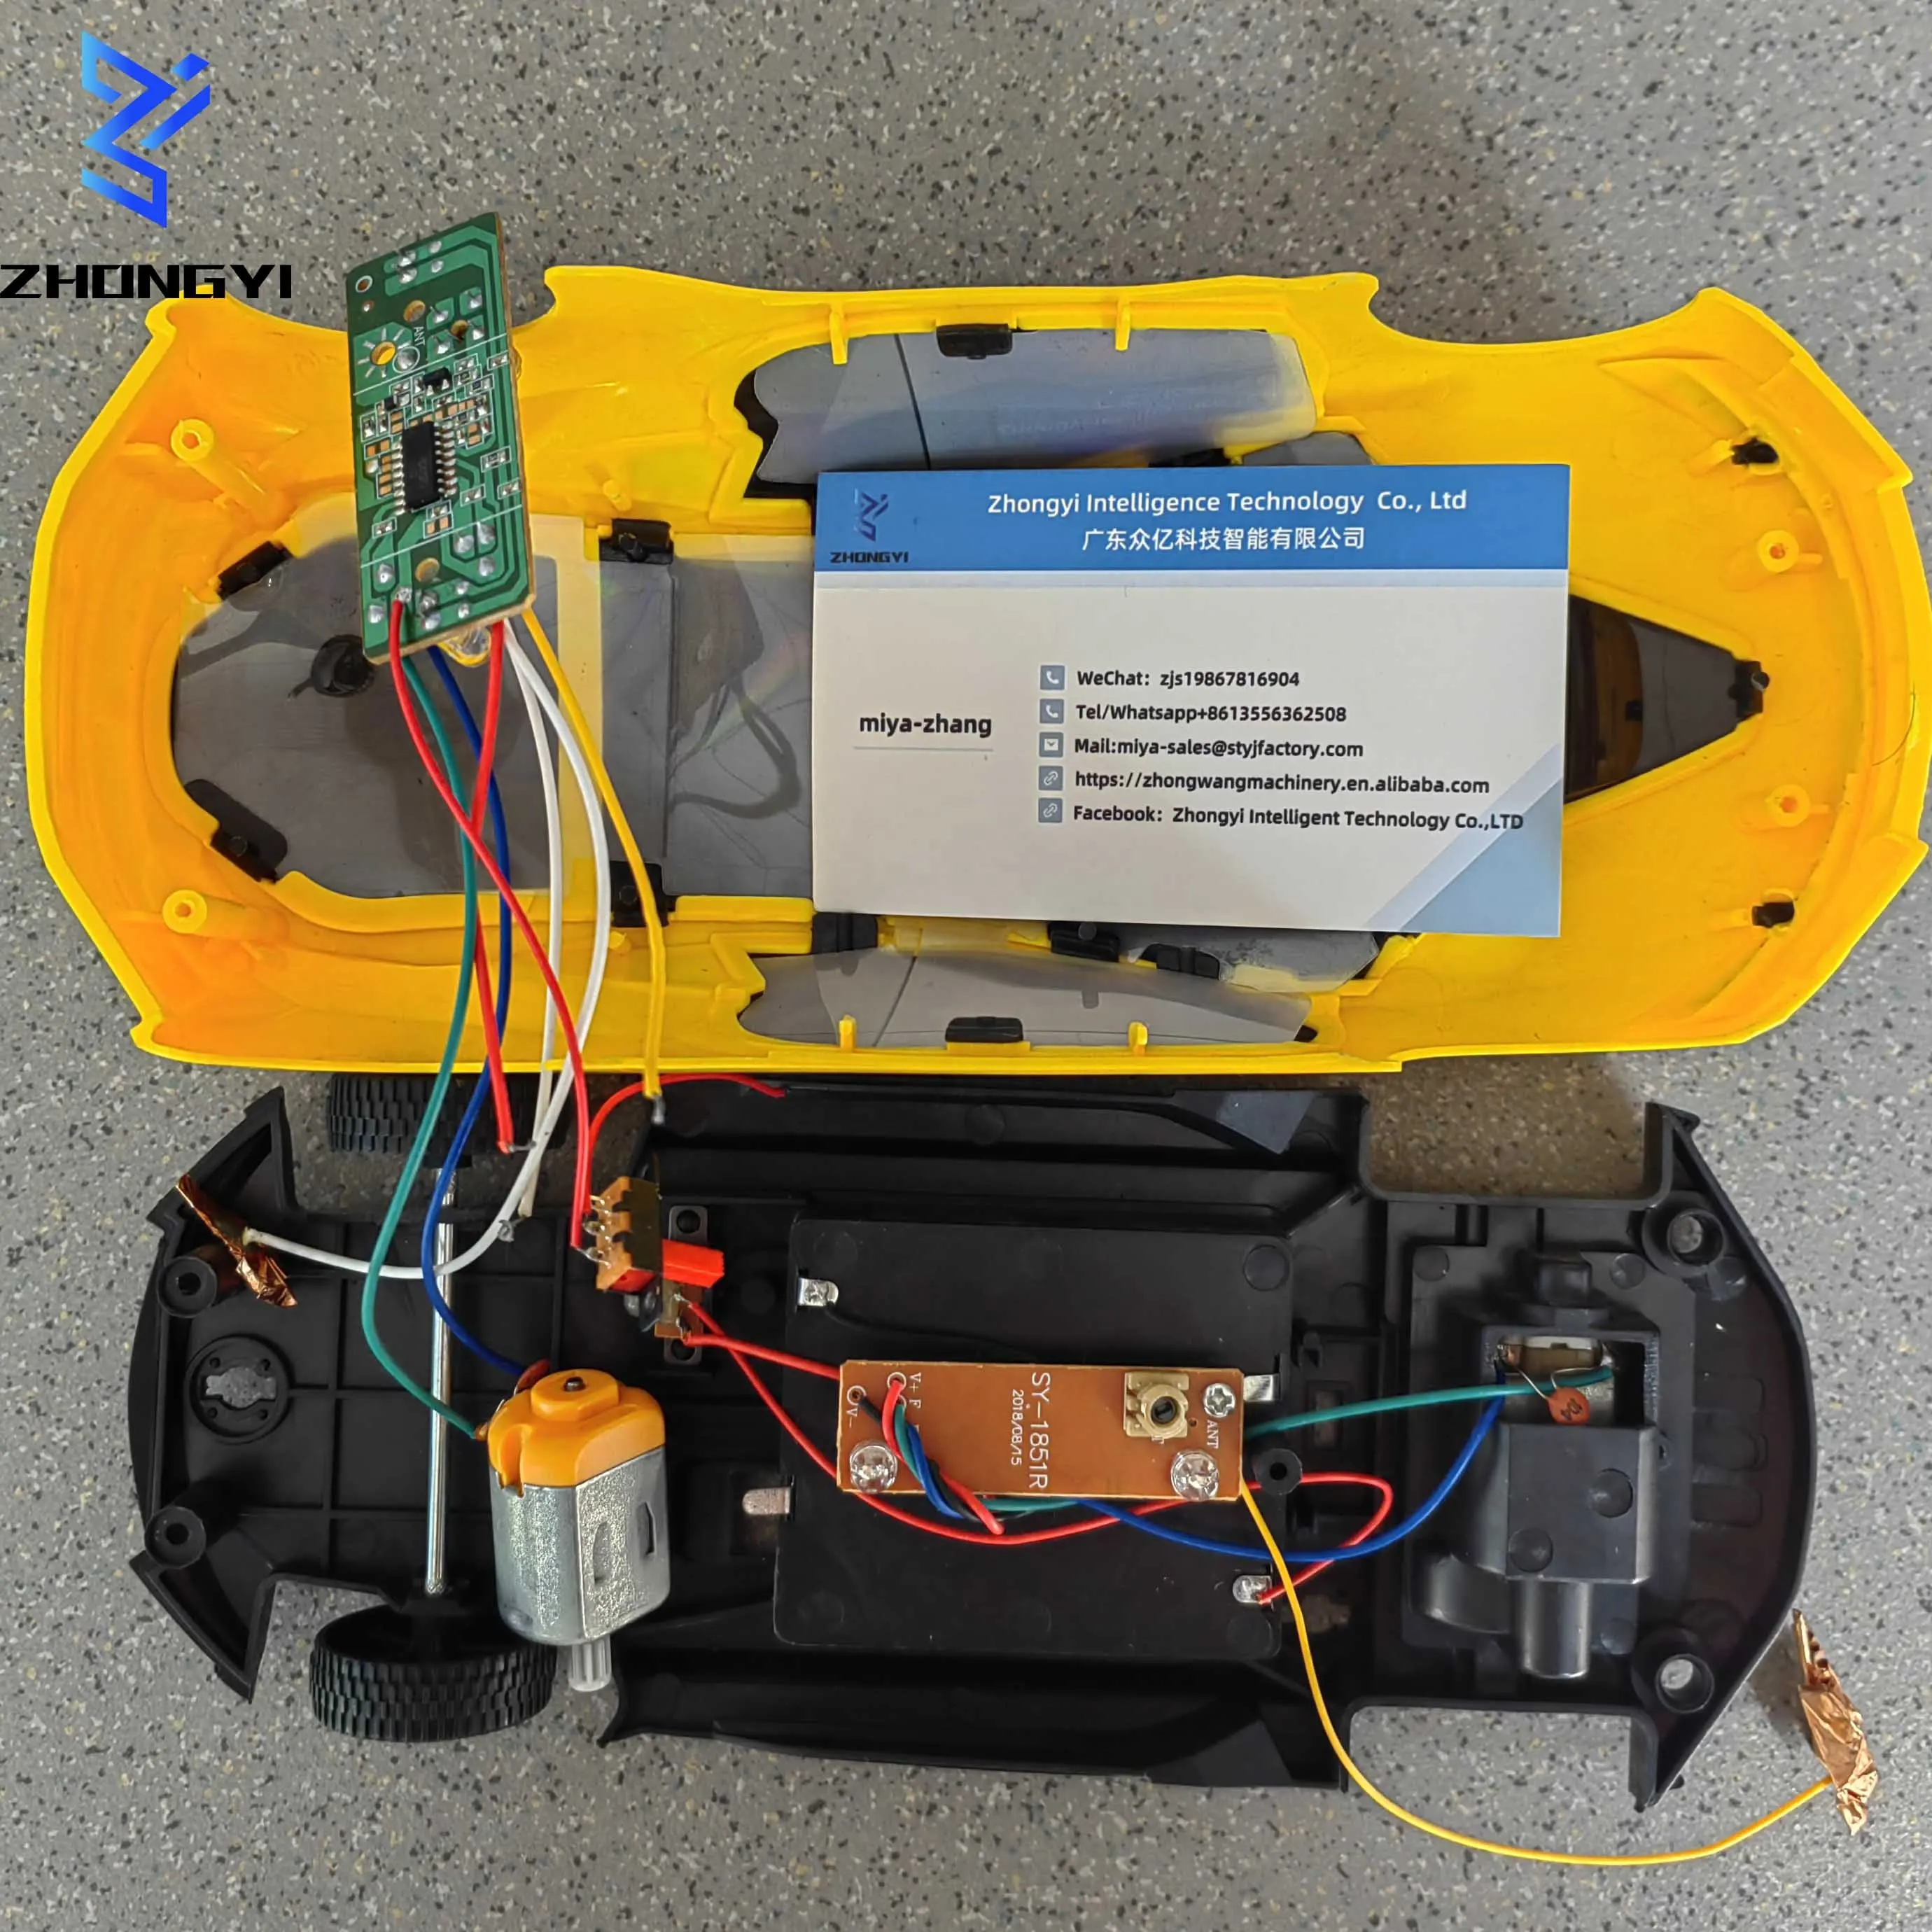 Gun Remote Control Kit Tablet Alarm Light Sound Vibrator Rc Racing Talking Tom Pcb Toy